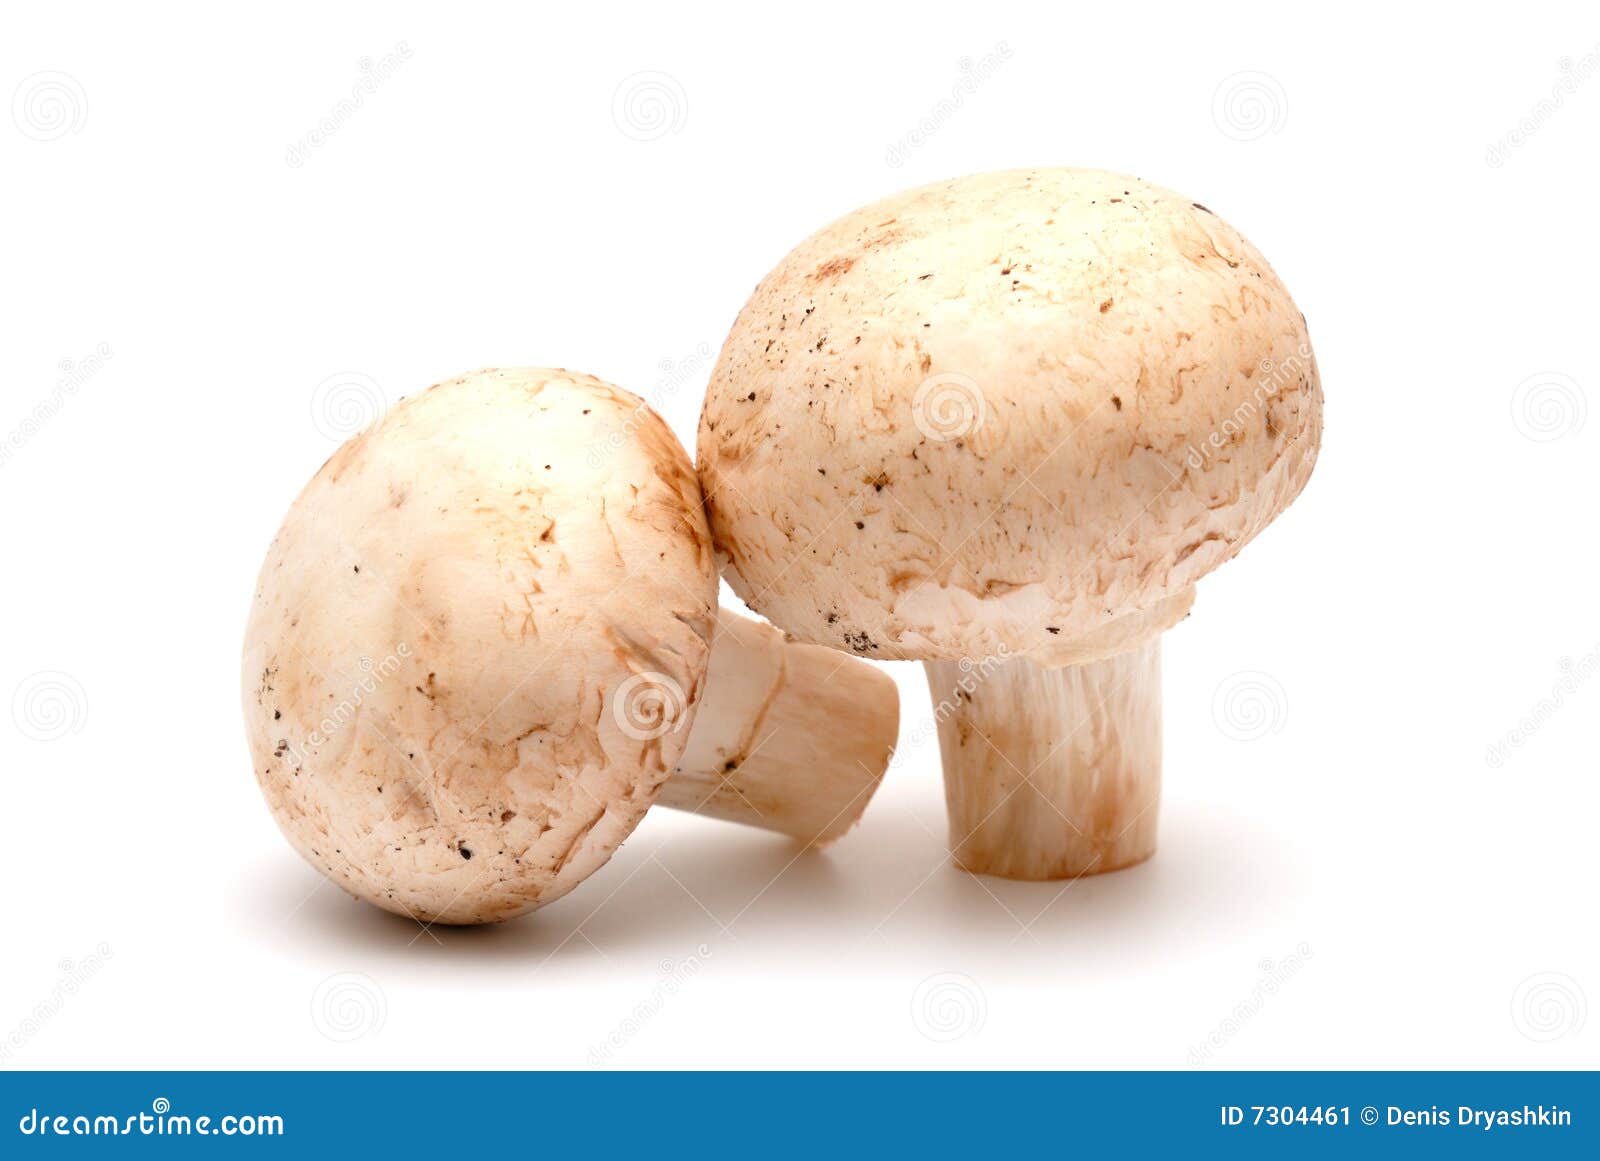 two-mushrooms-champignon-7304461.jpg